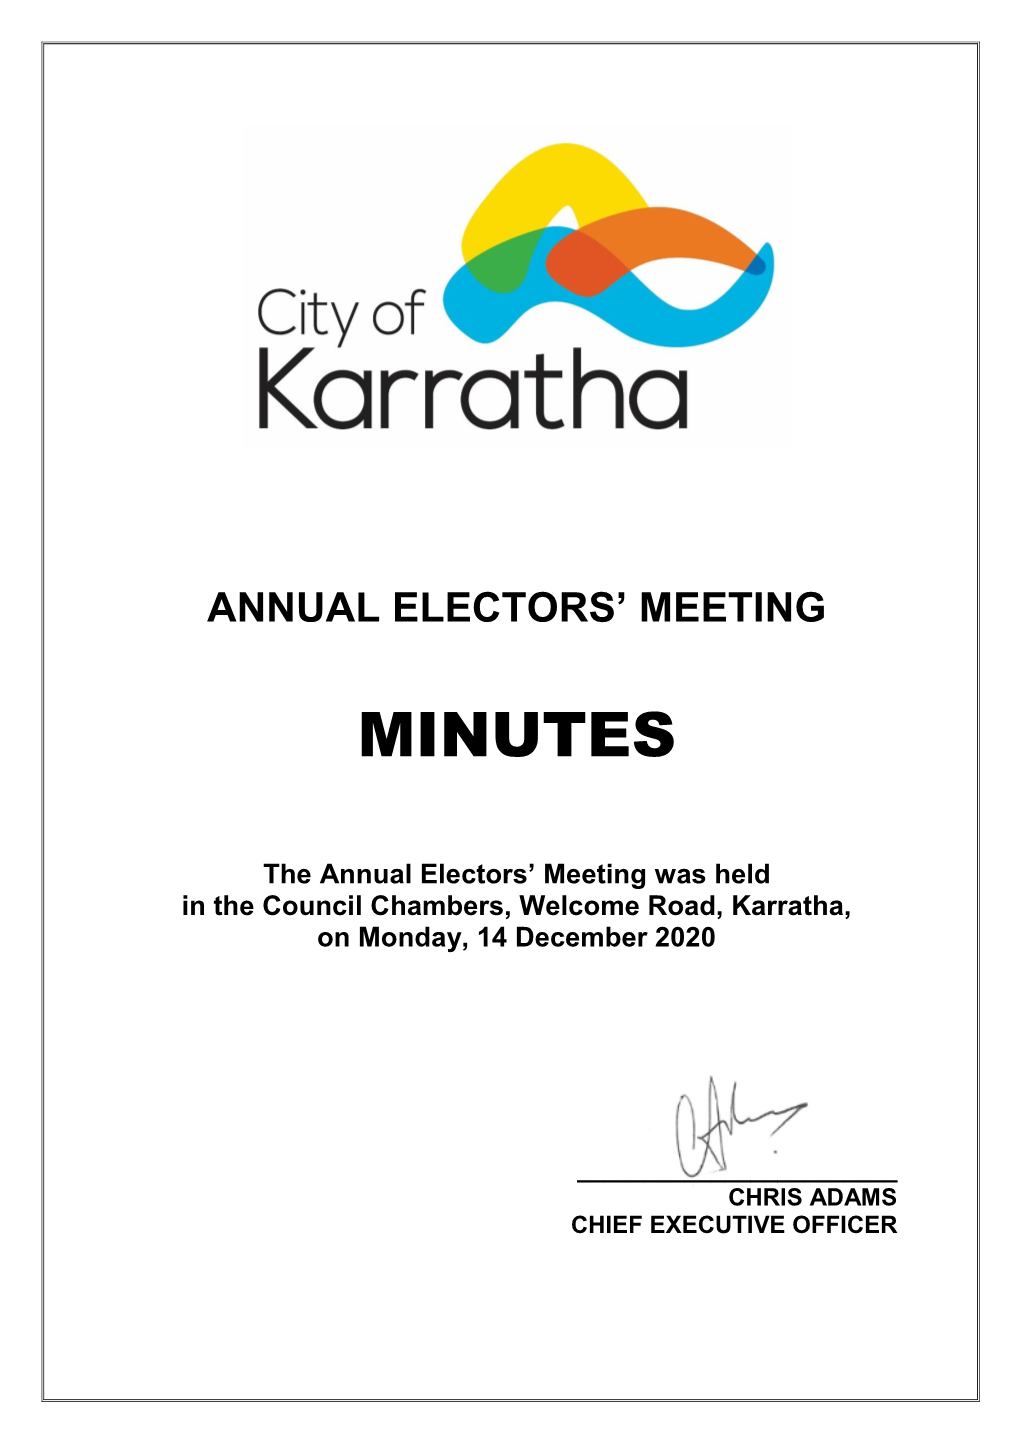 Annual Electors' Meeting